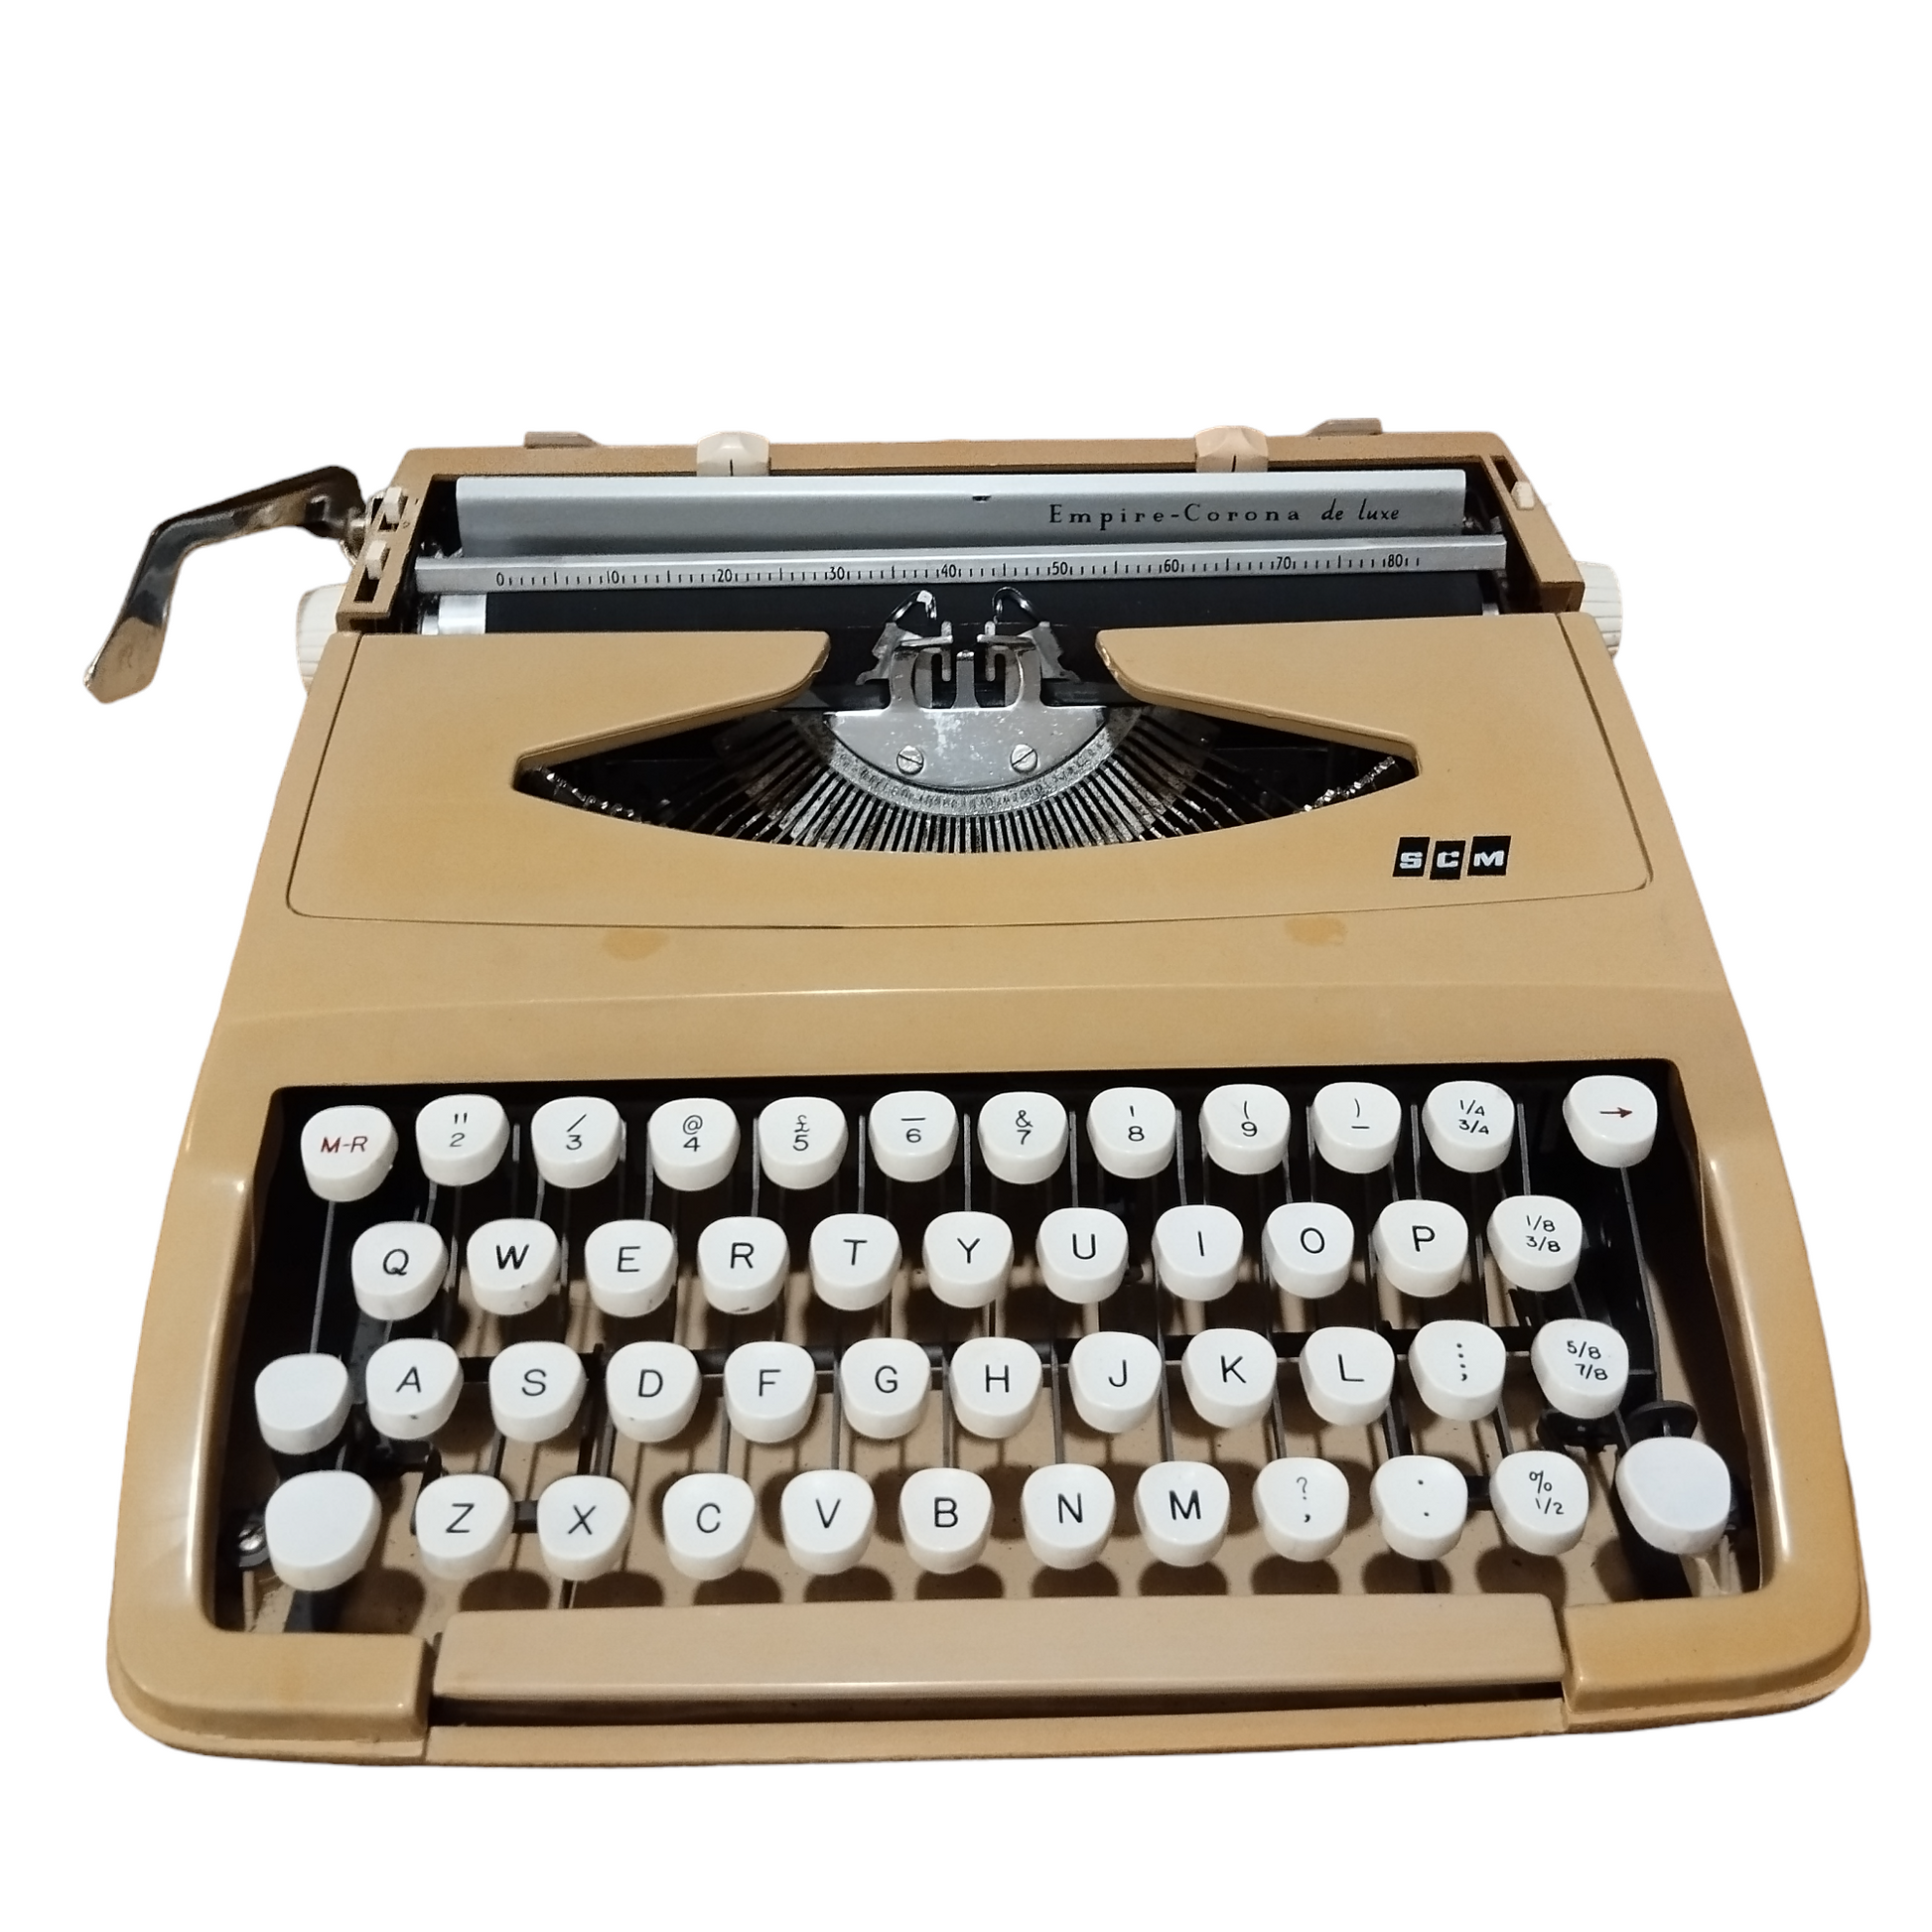 Image of Smith Corona SCM Typewriter from universaltypewritercompany.in